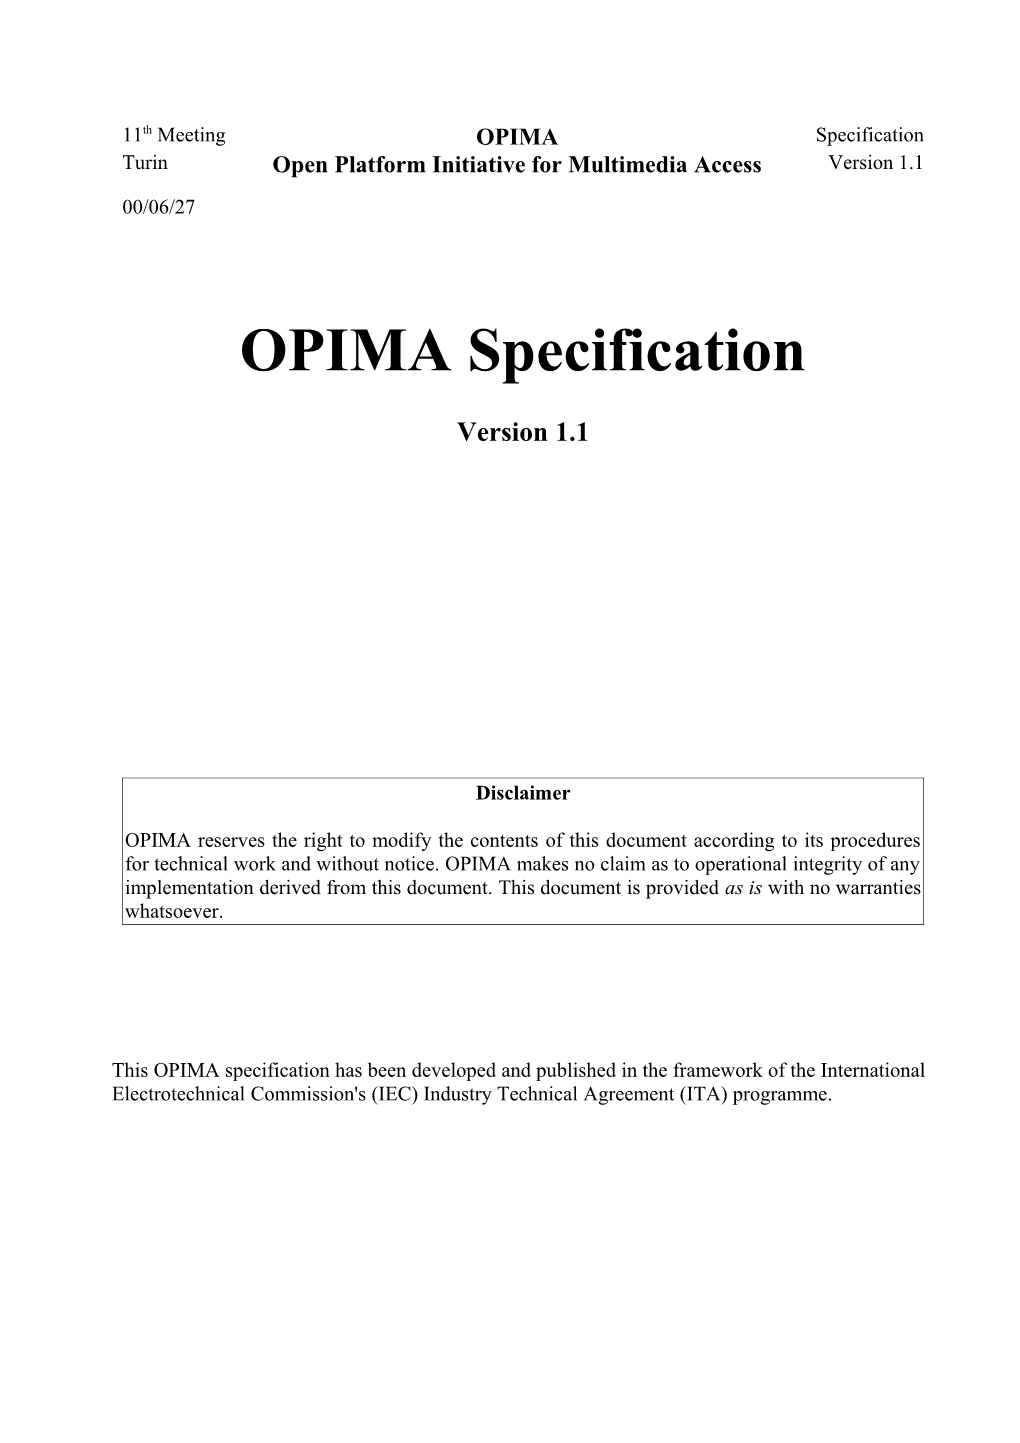 OPIMA Specification